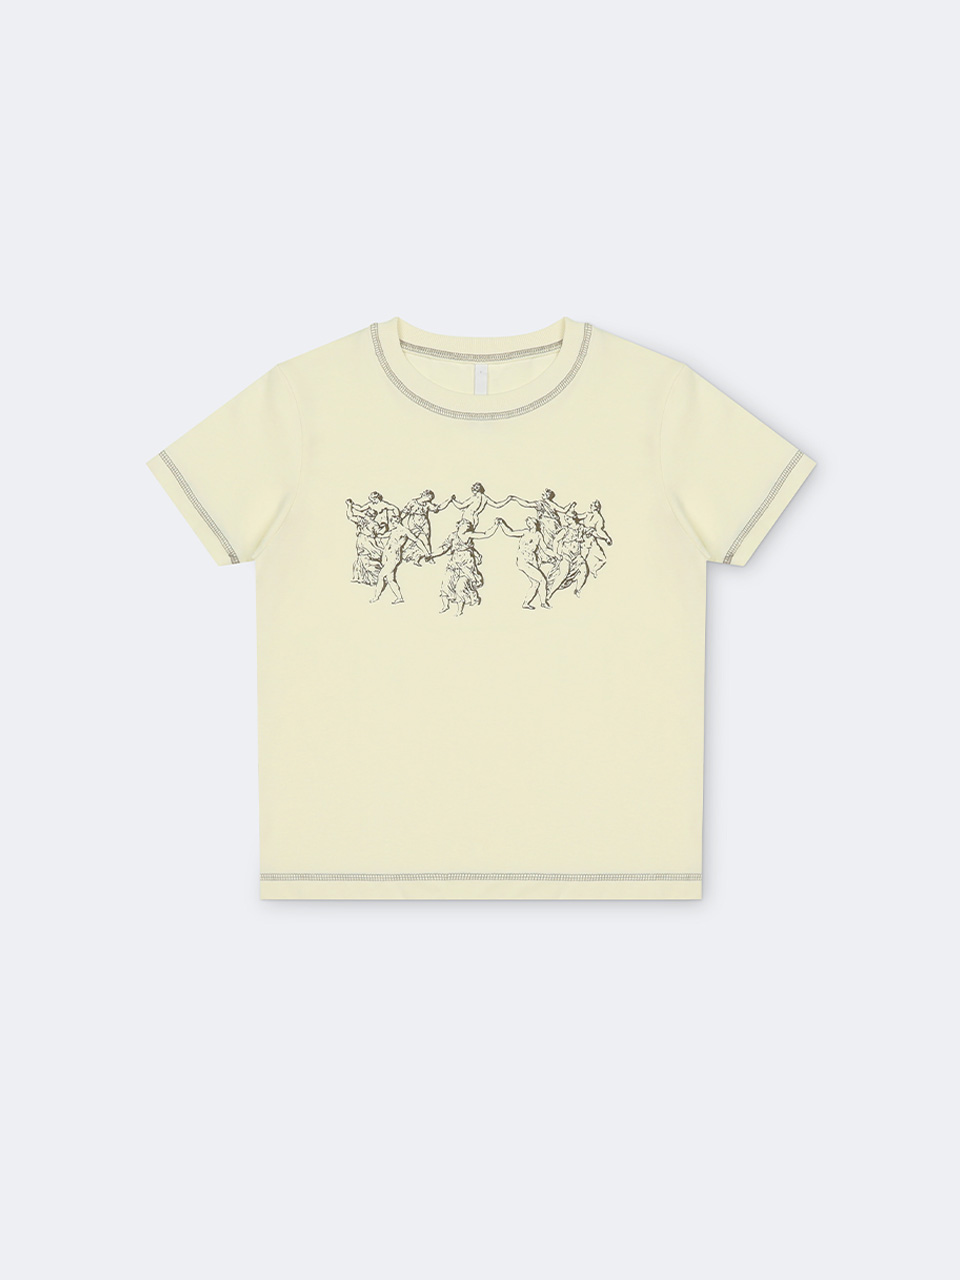 Dancing nymphs Slim fit T-shirt ivory